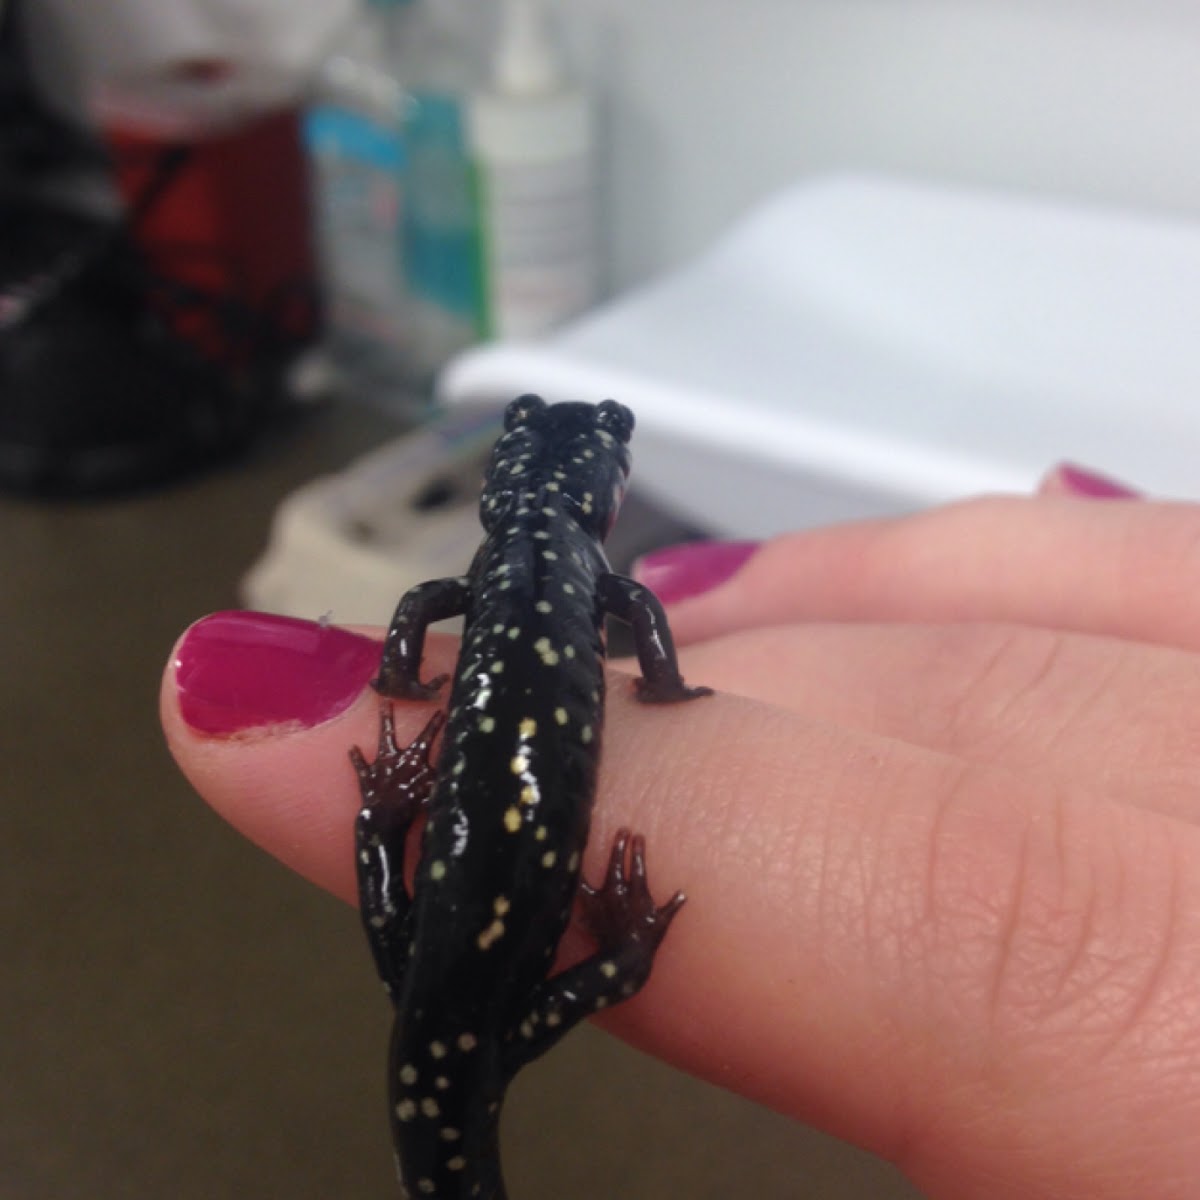 Slimy salamander